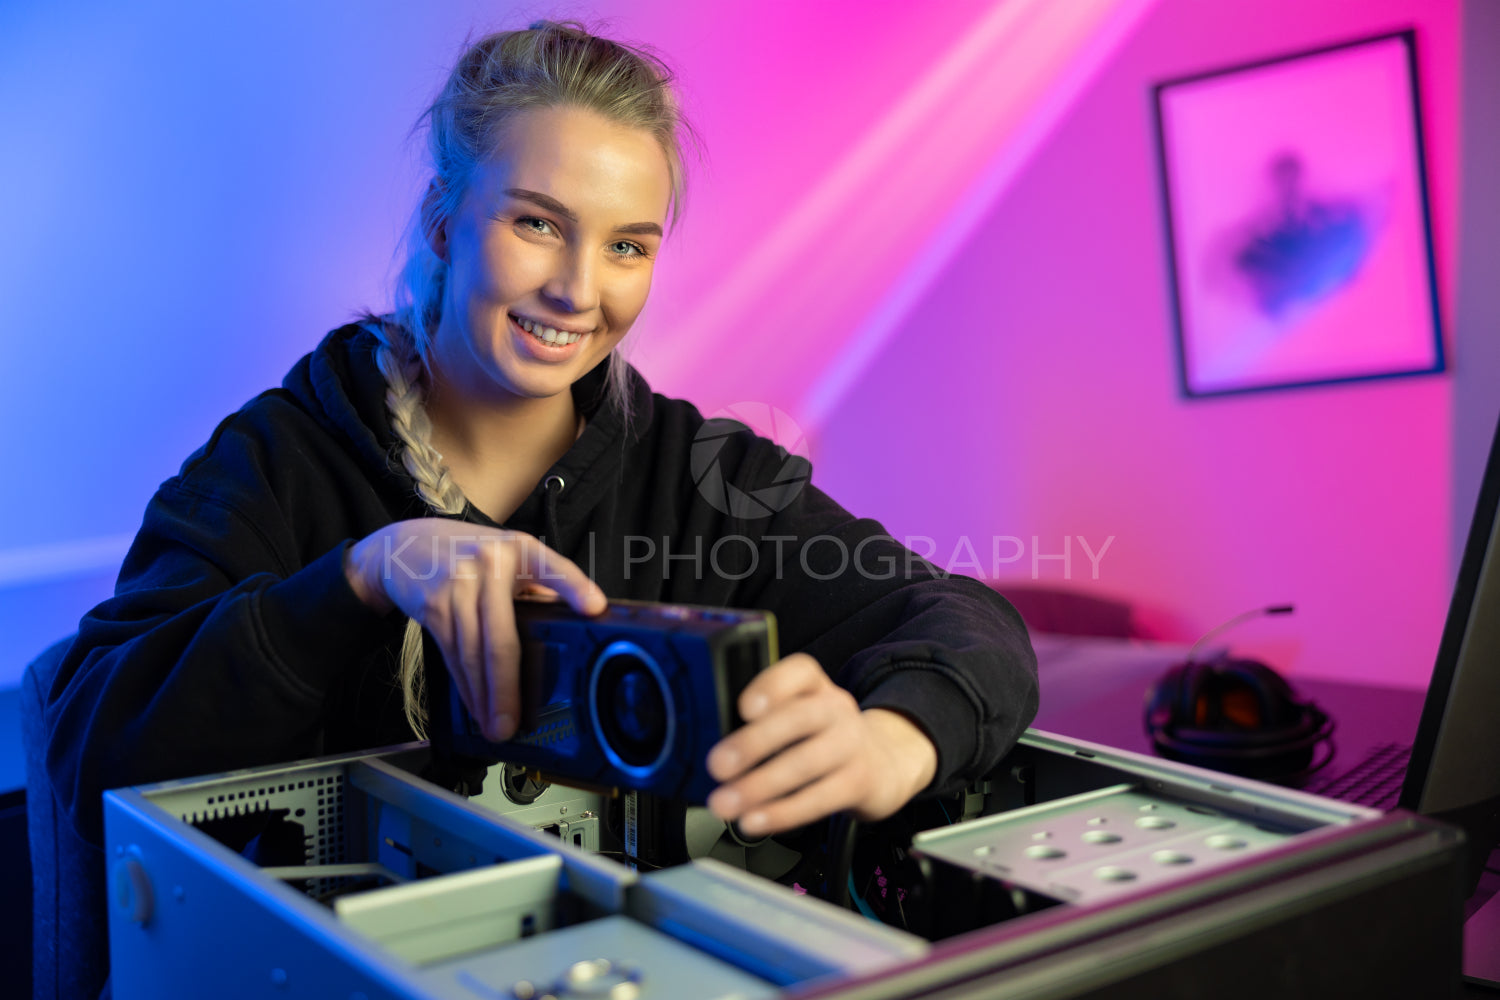 Smiling E-sport Gamer Girl Installing New GPU Video Card in Her Gaming PC